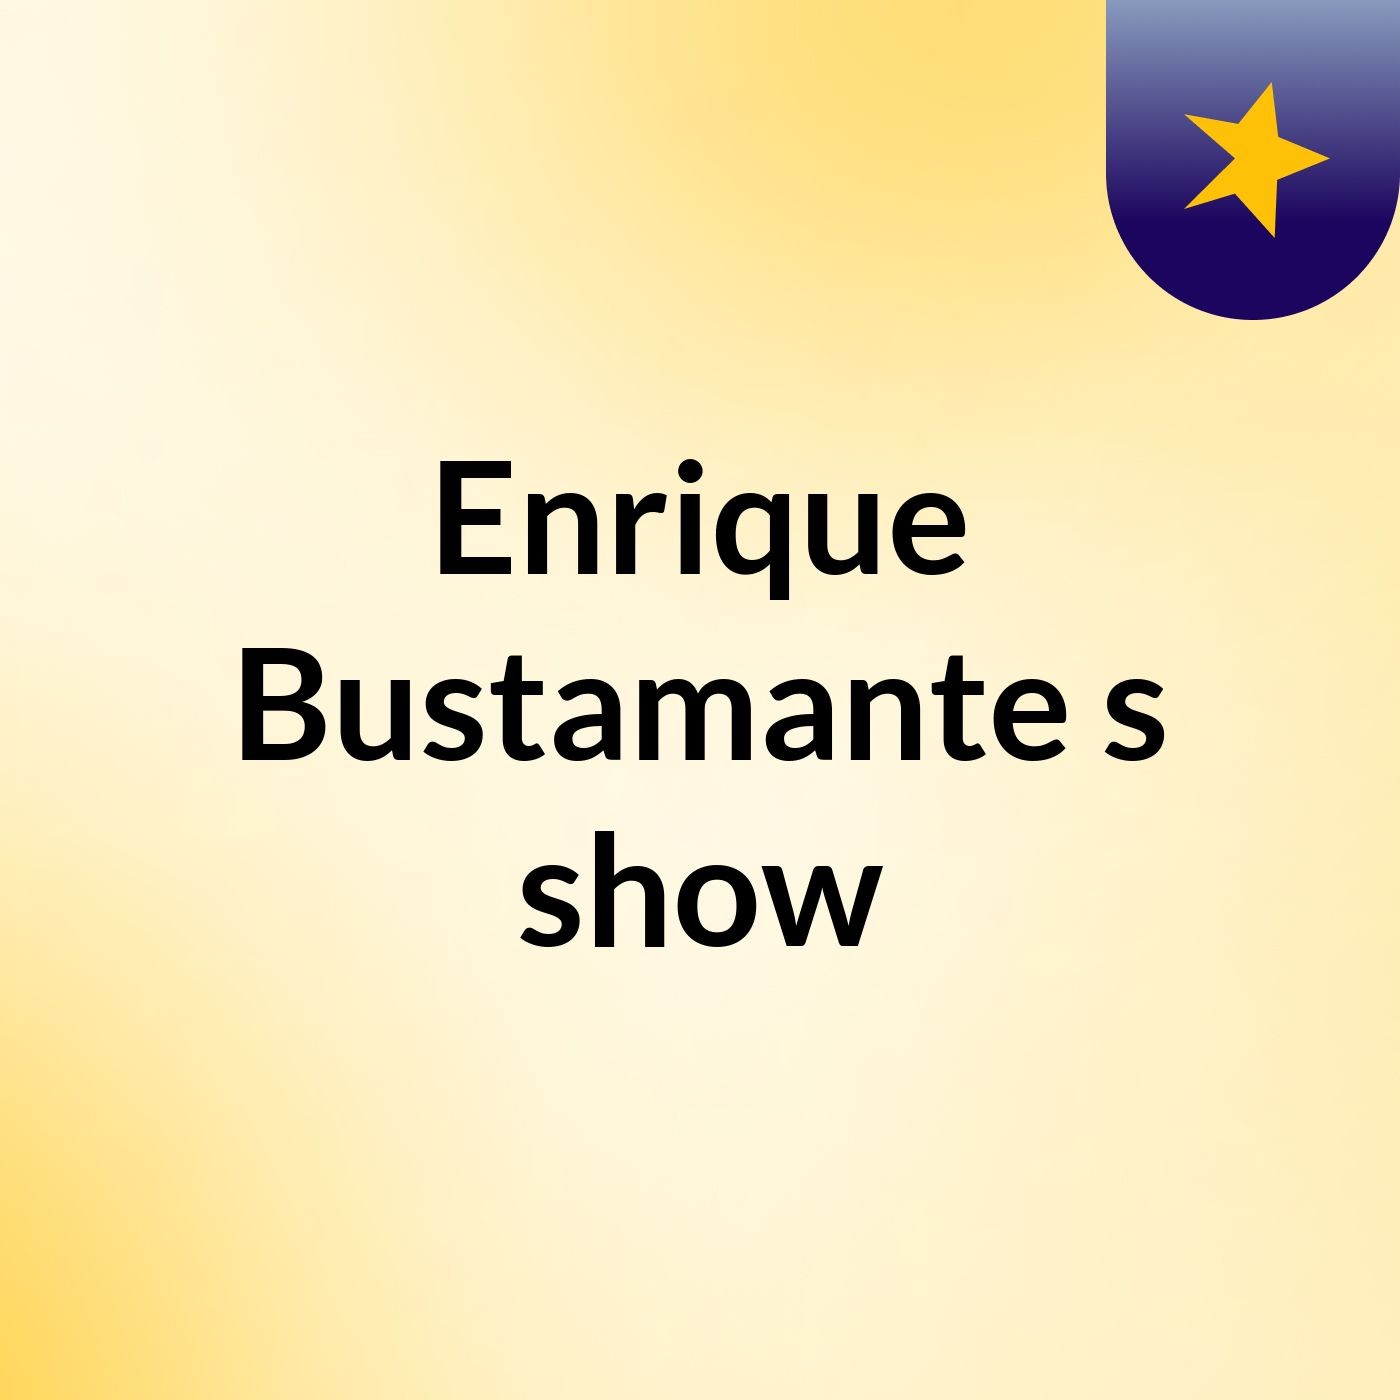 Enrique Bustamante's show